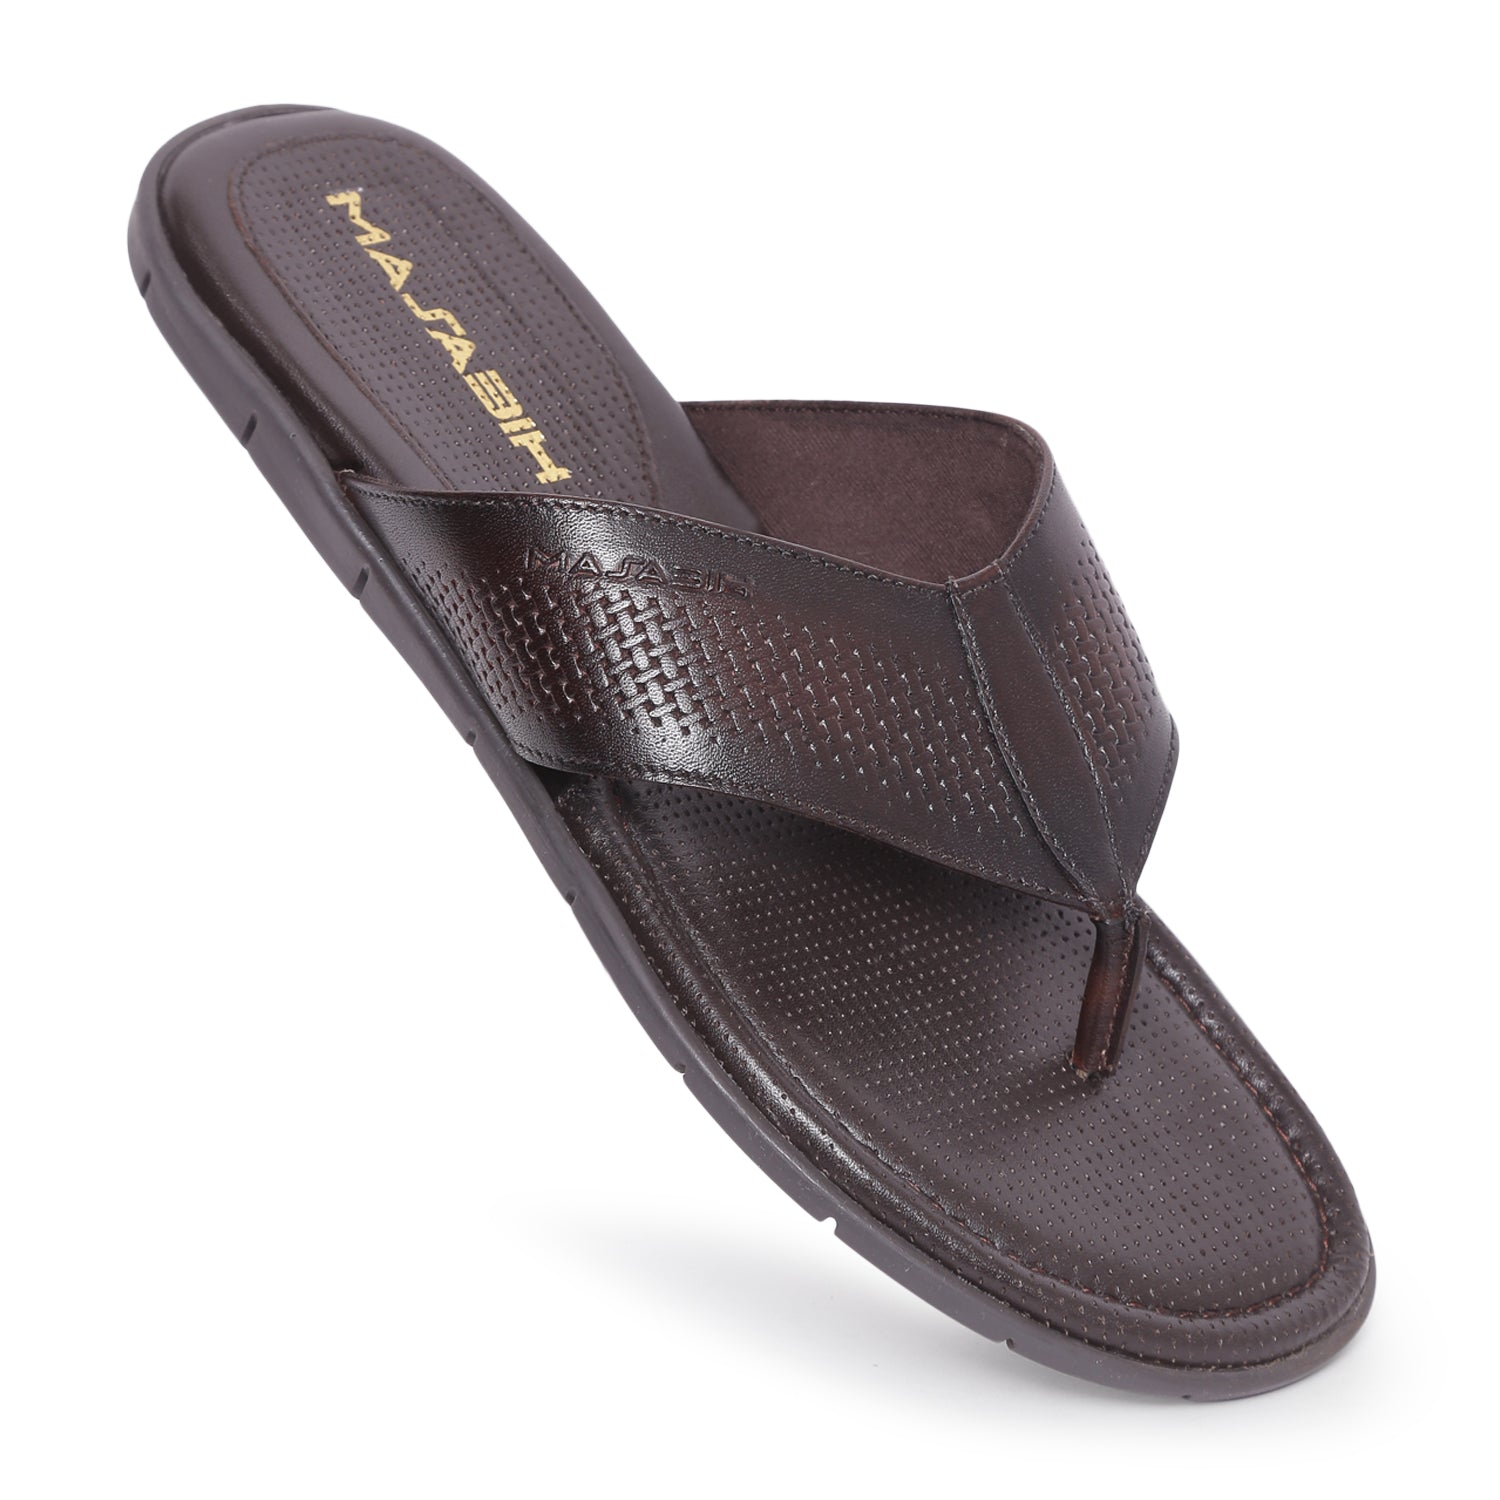 MASABIH Geniune Leather Soft Mesh Print Brown Color modern thong sandals for Mens